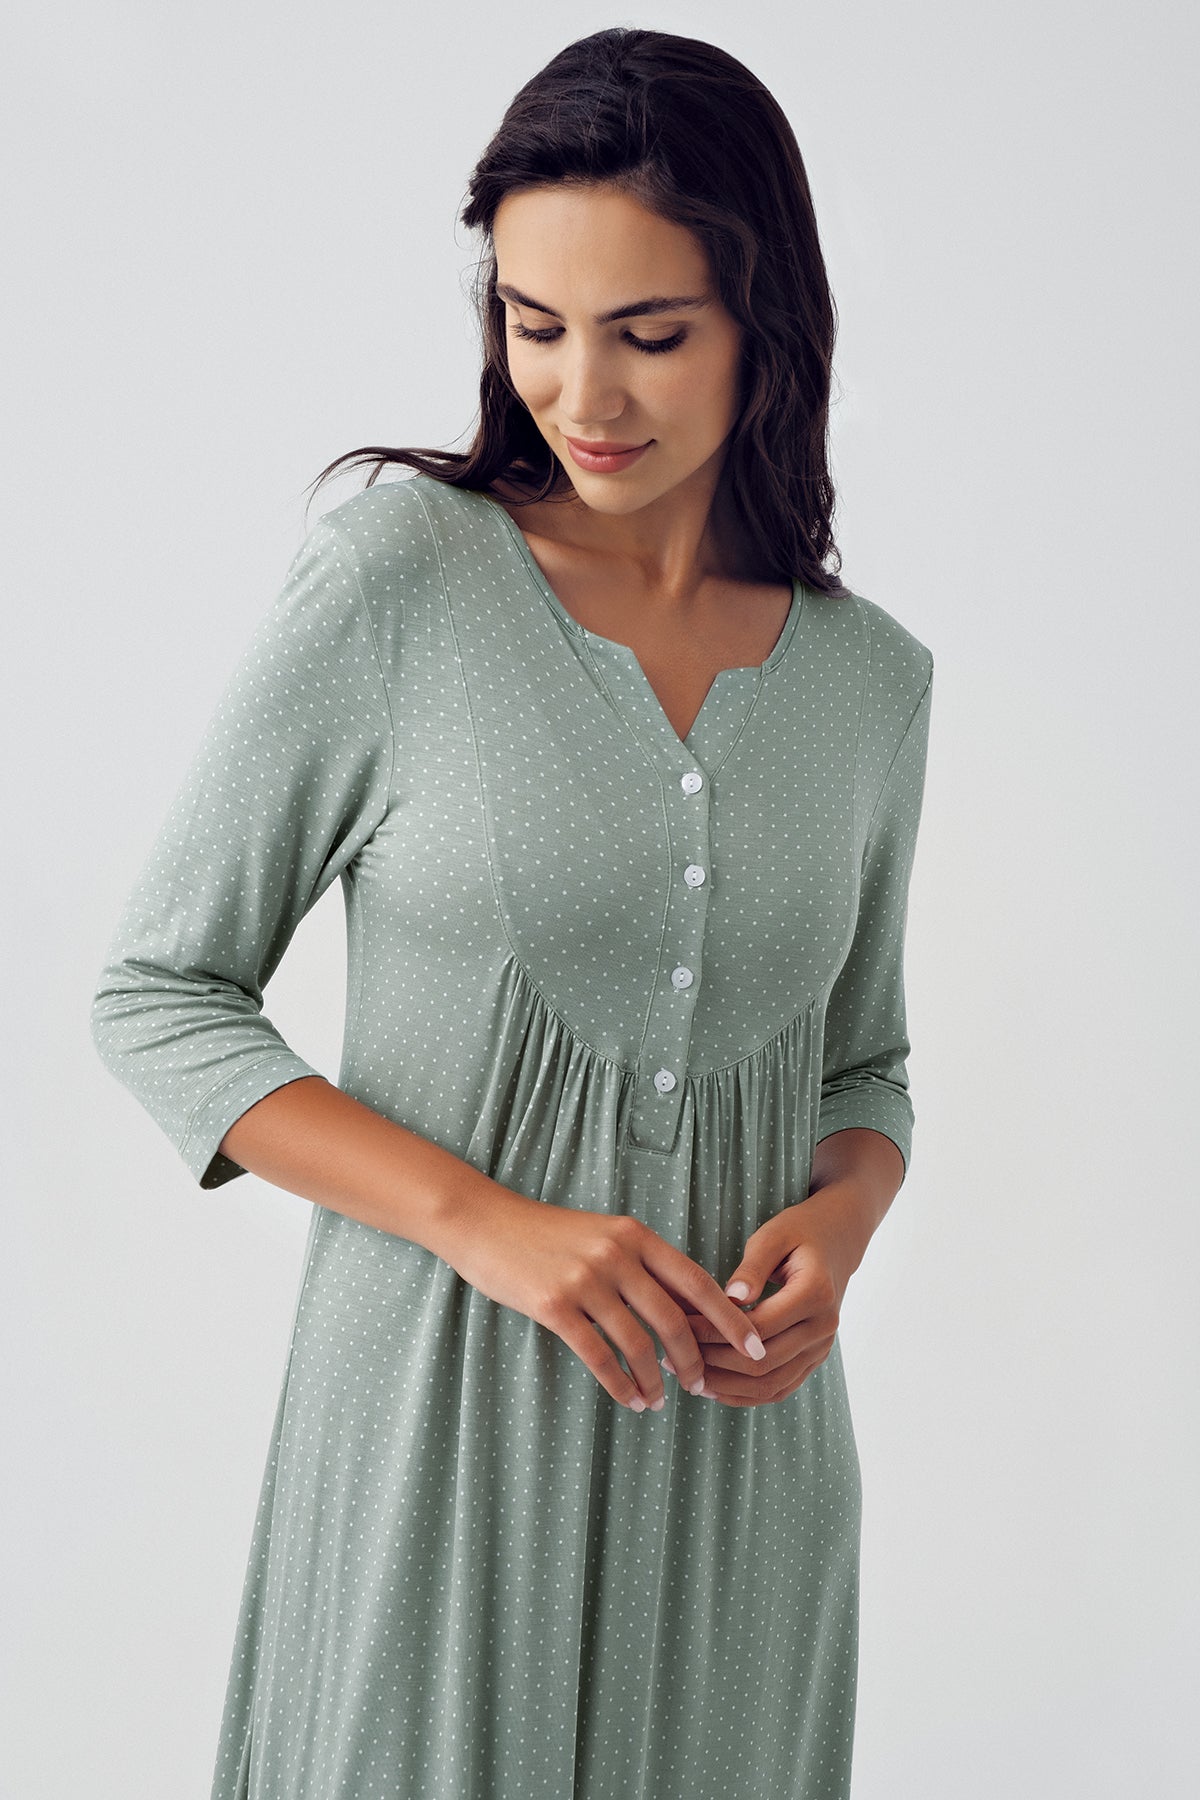 Shopymommy 15104 Polka Dot Maternity & Nursing Nightgown Green